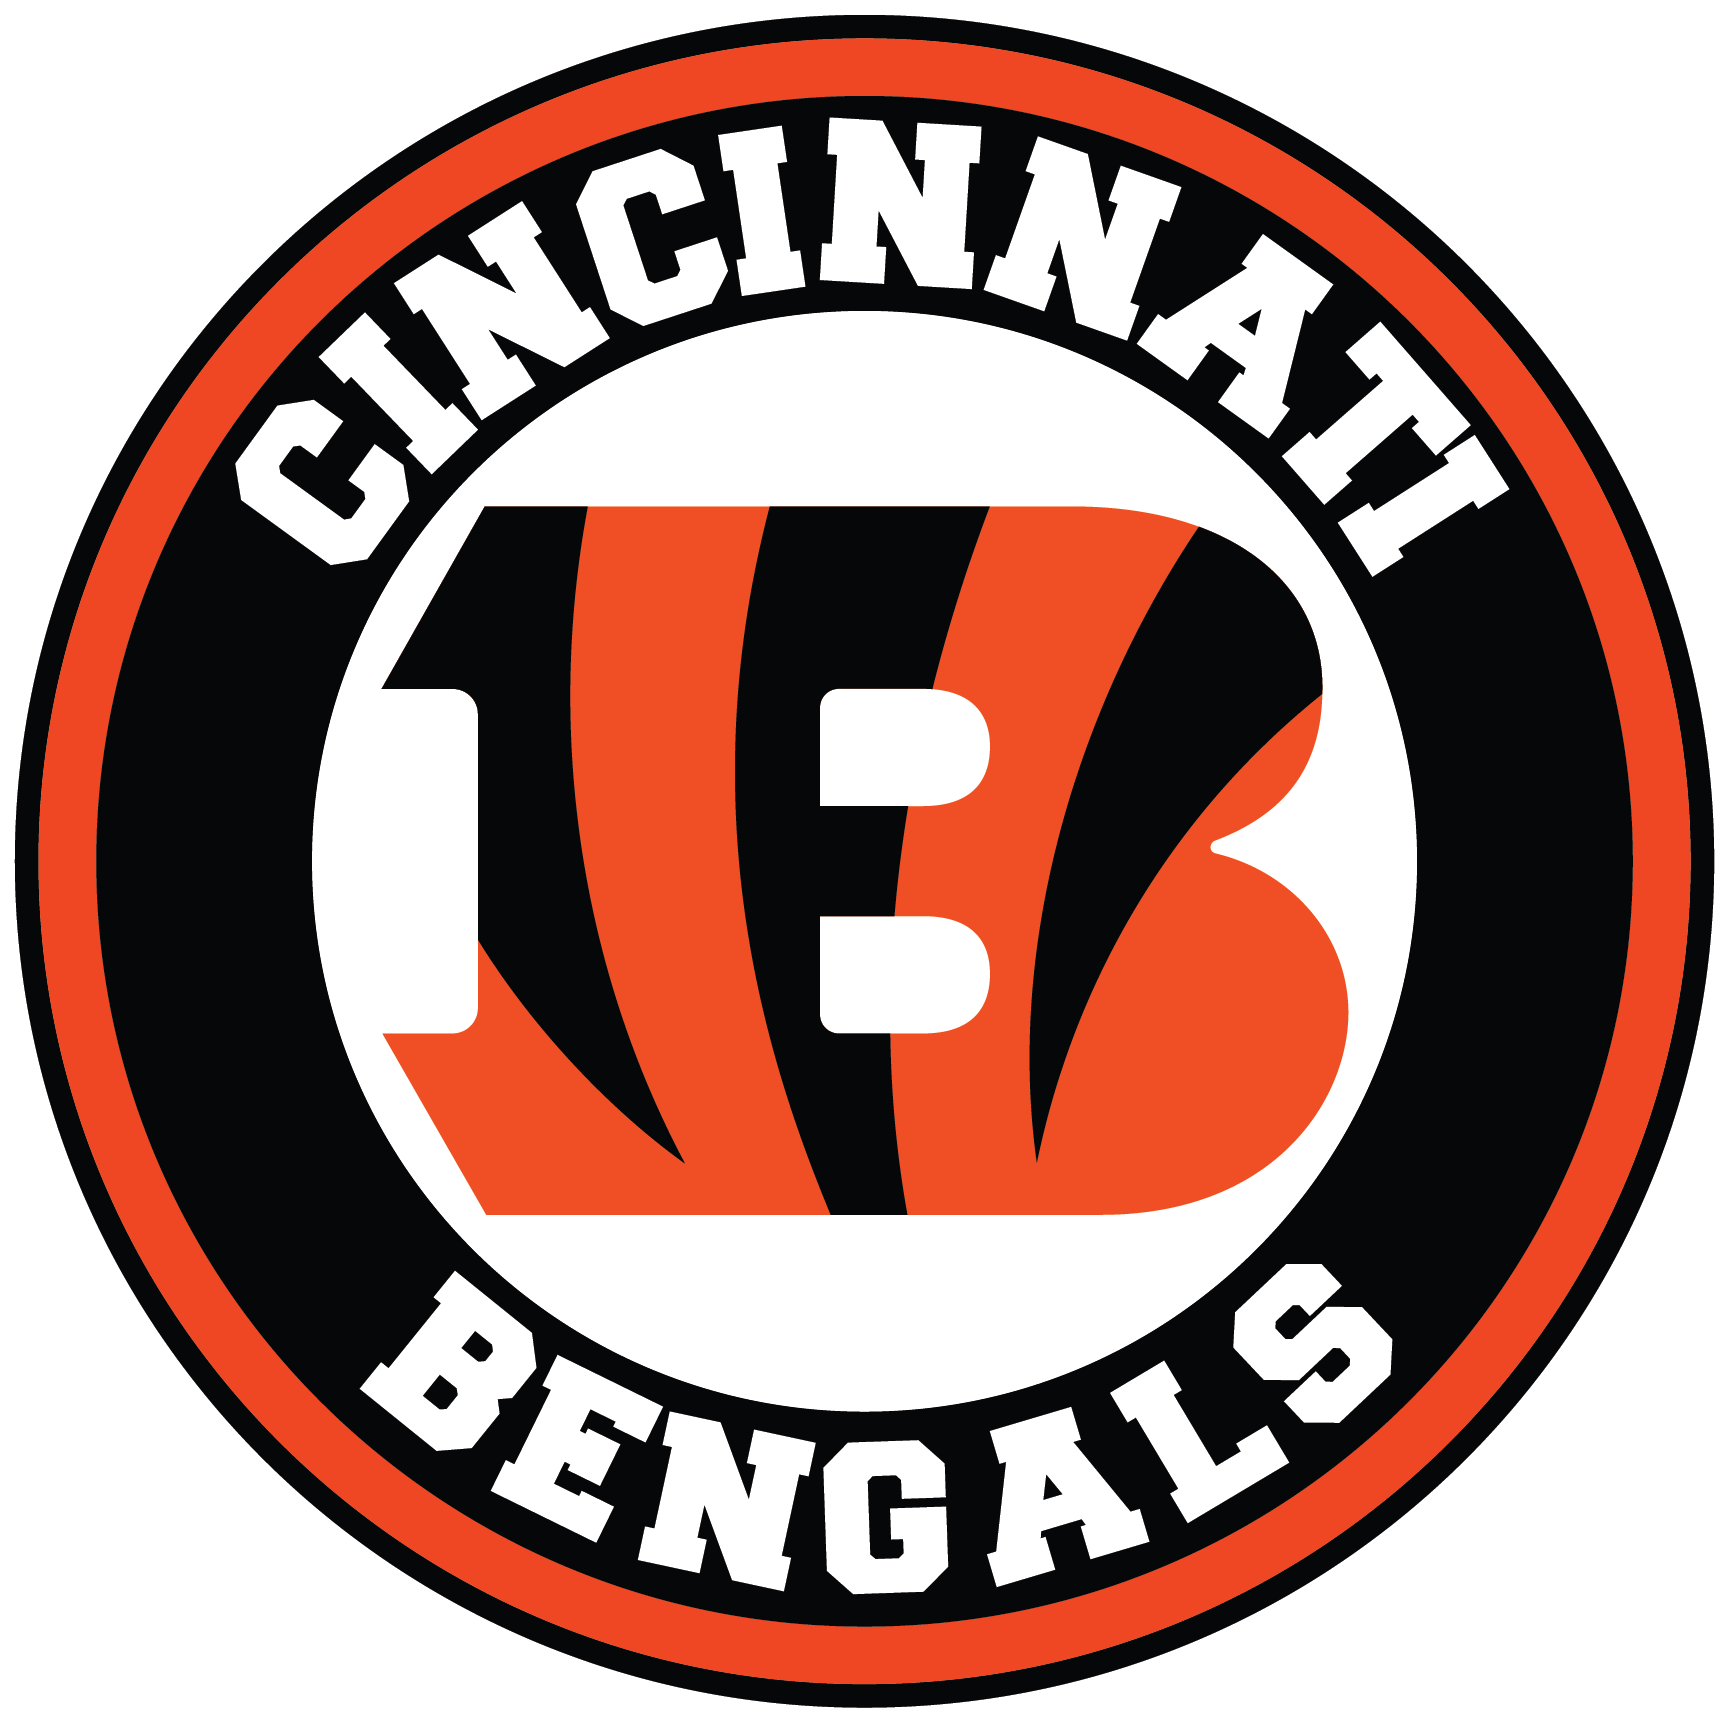 Cincinnati Bengals Logo Stickers for Sale